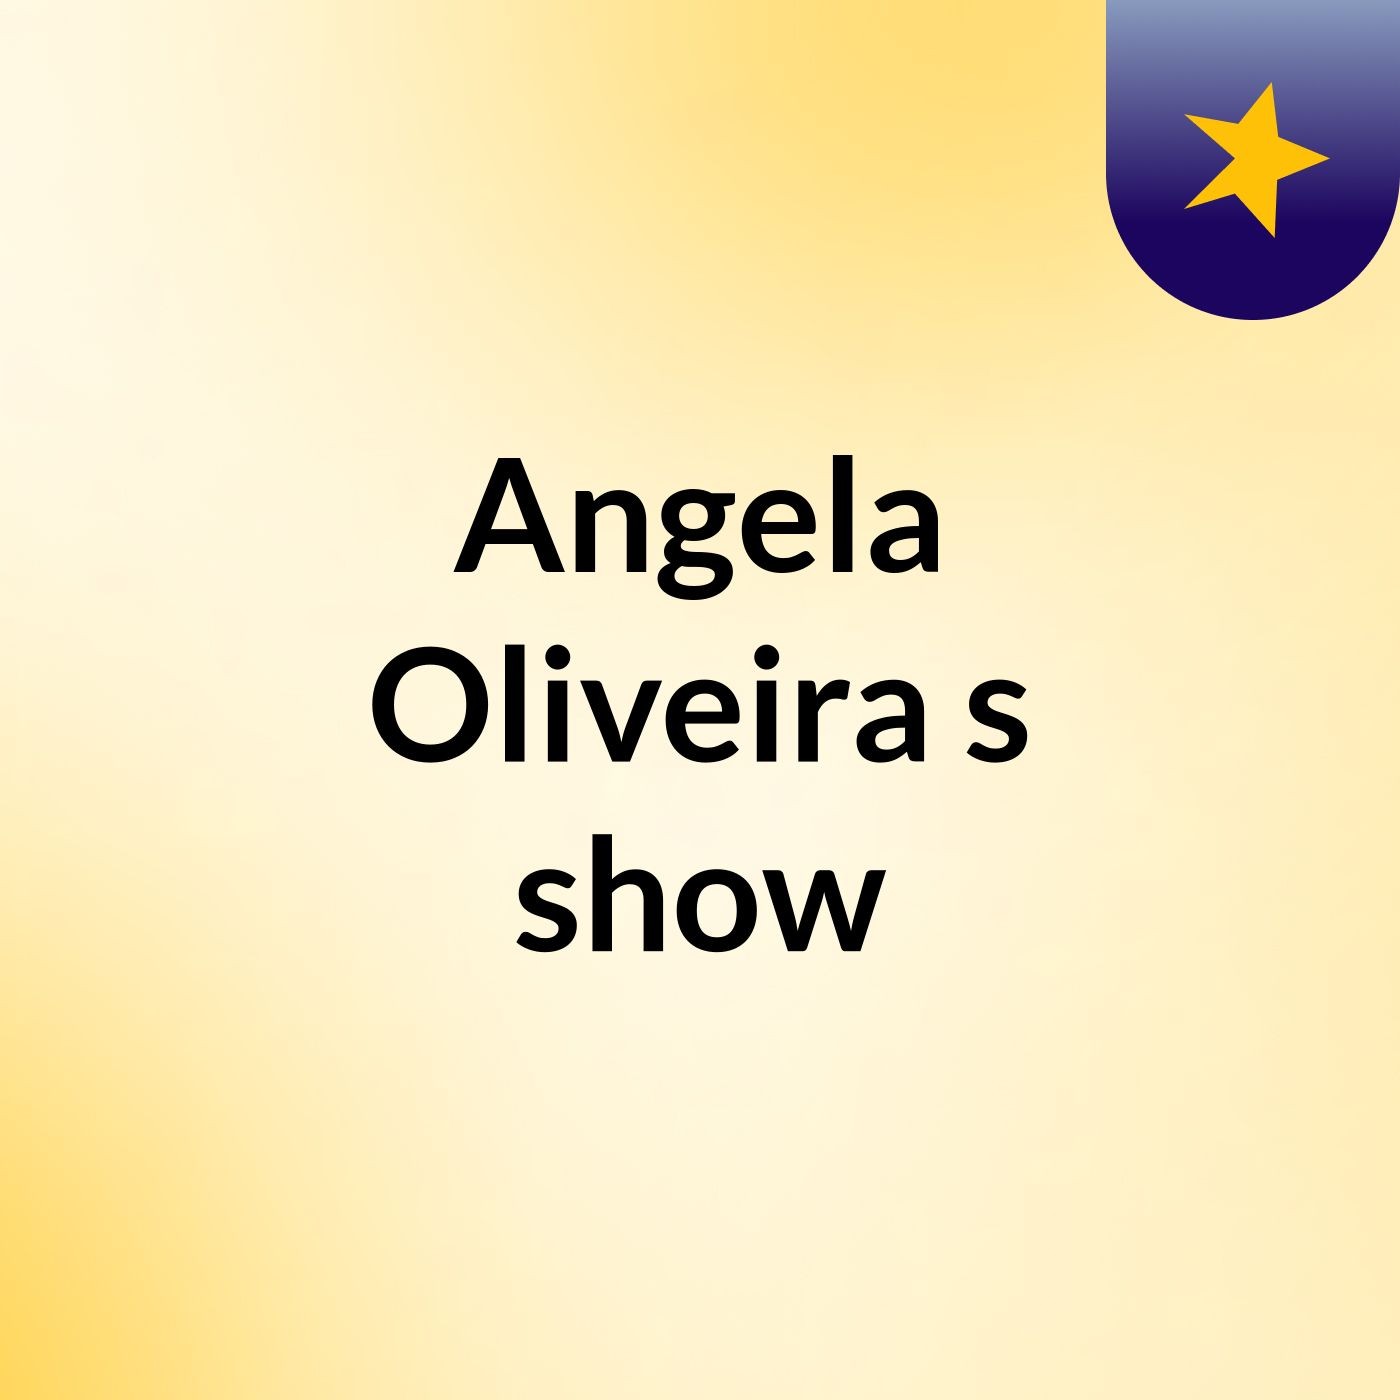 Angela Oliveira's show